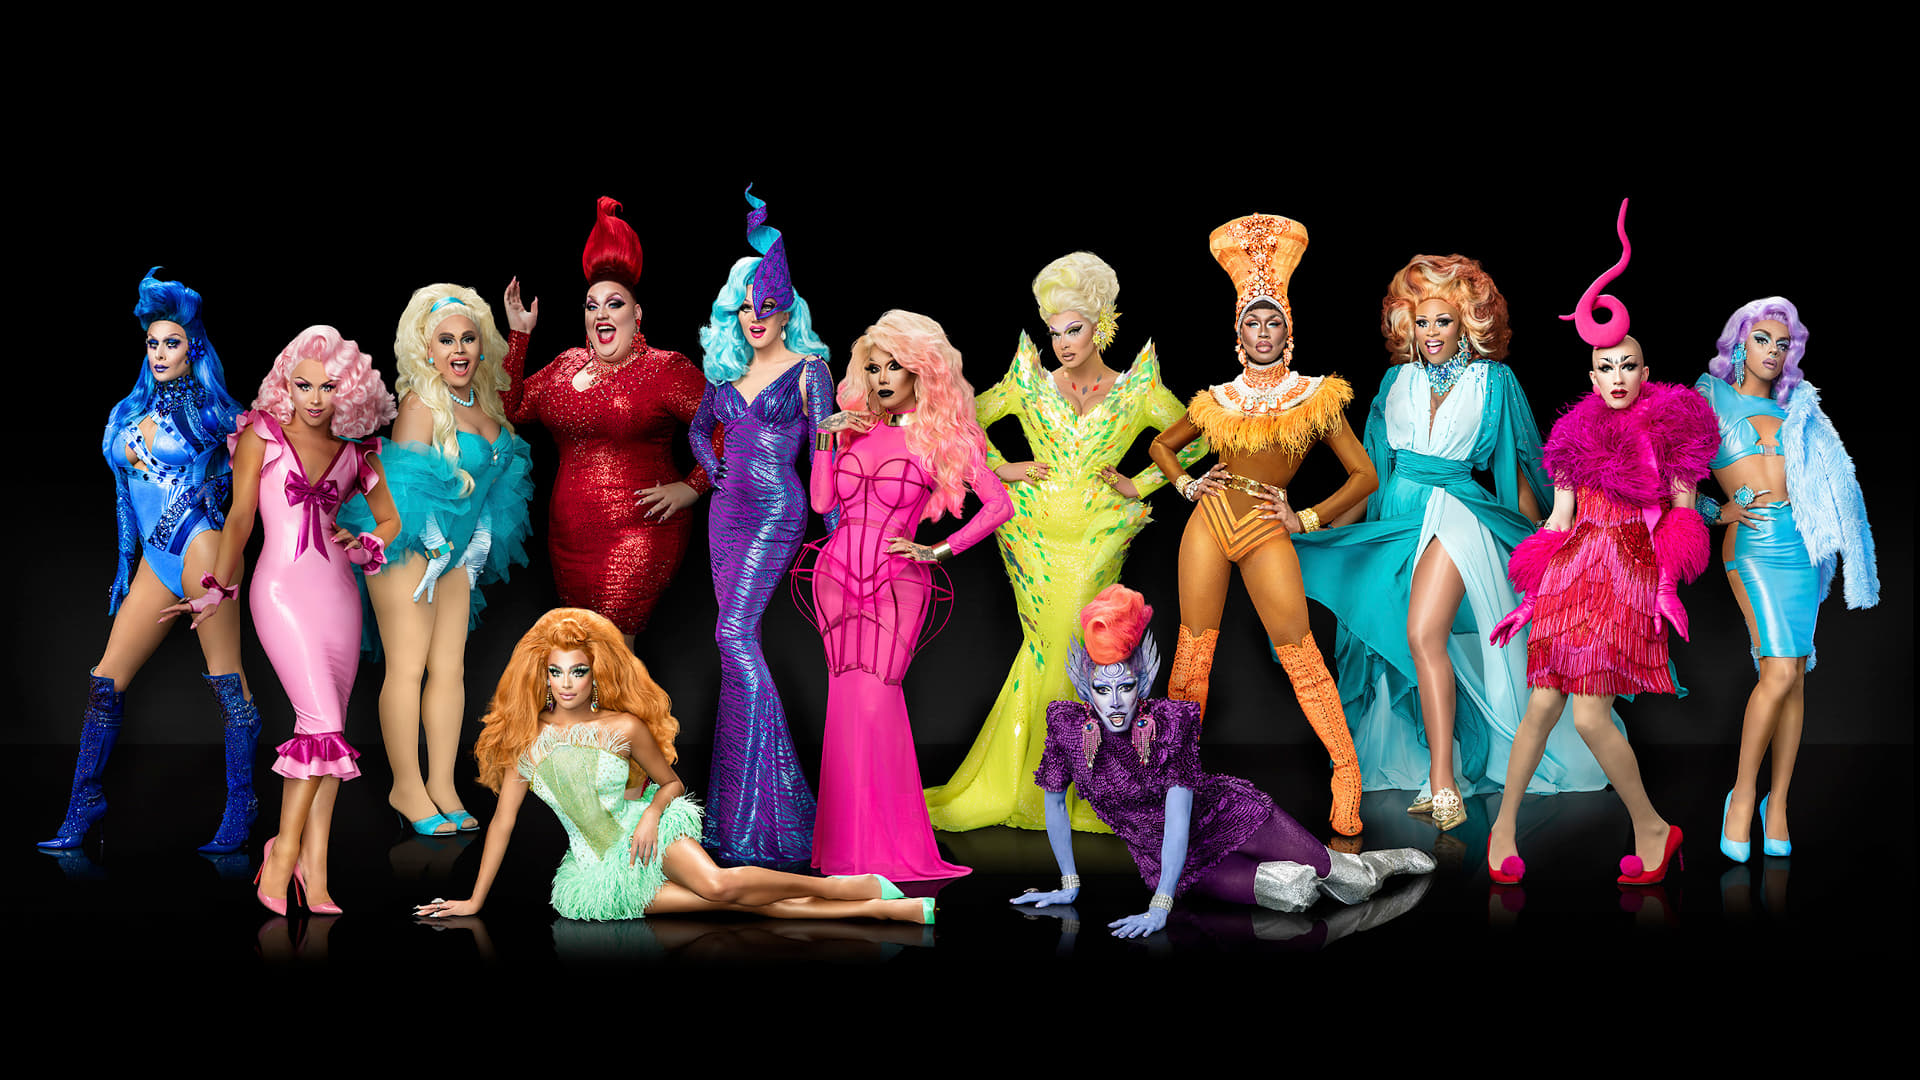 RuPaul: Reinas del drag - Season 16 Episode 3